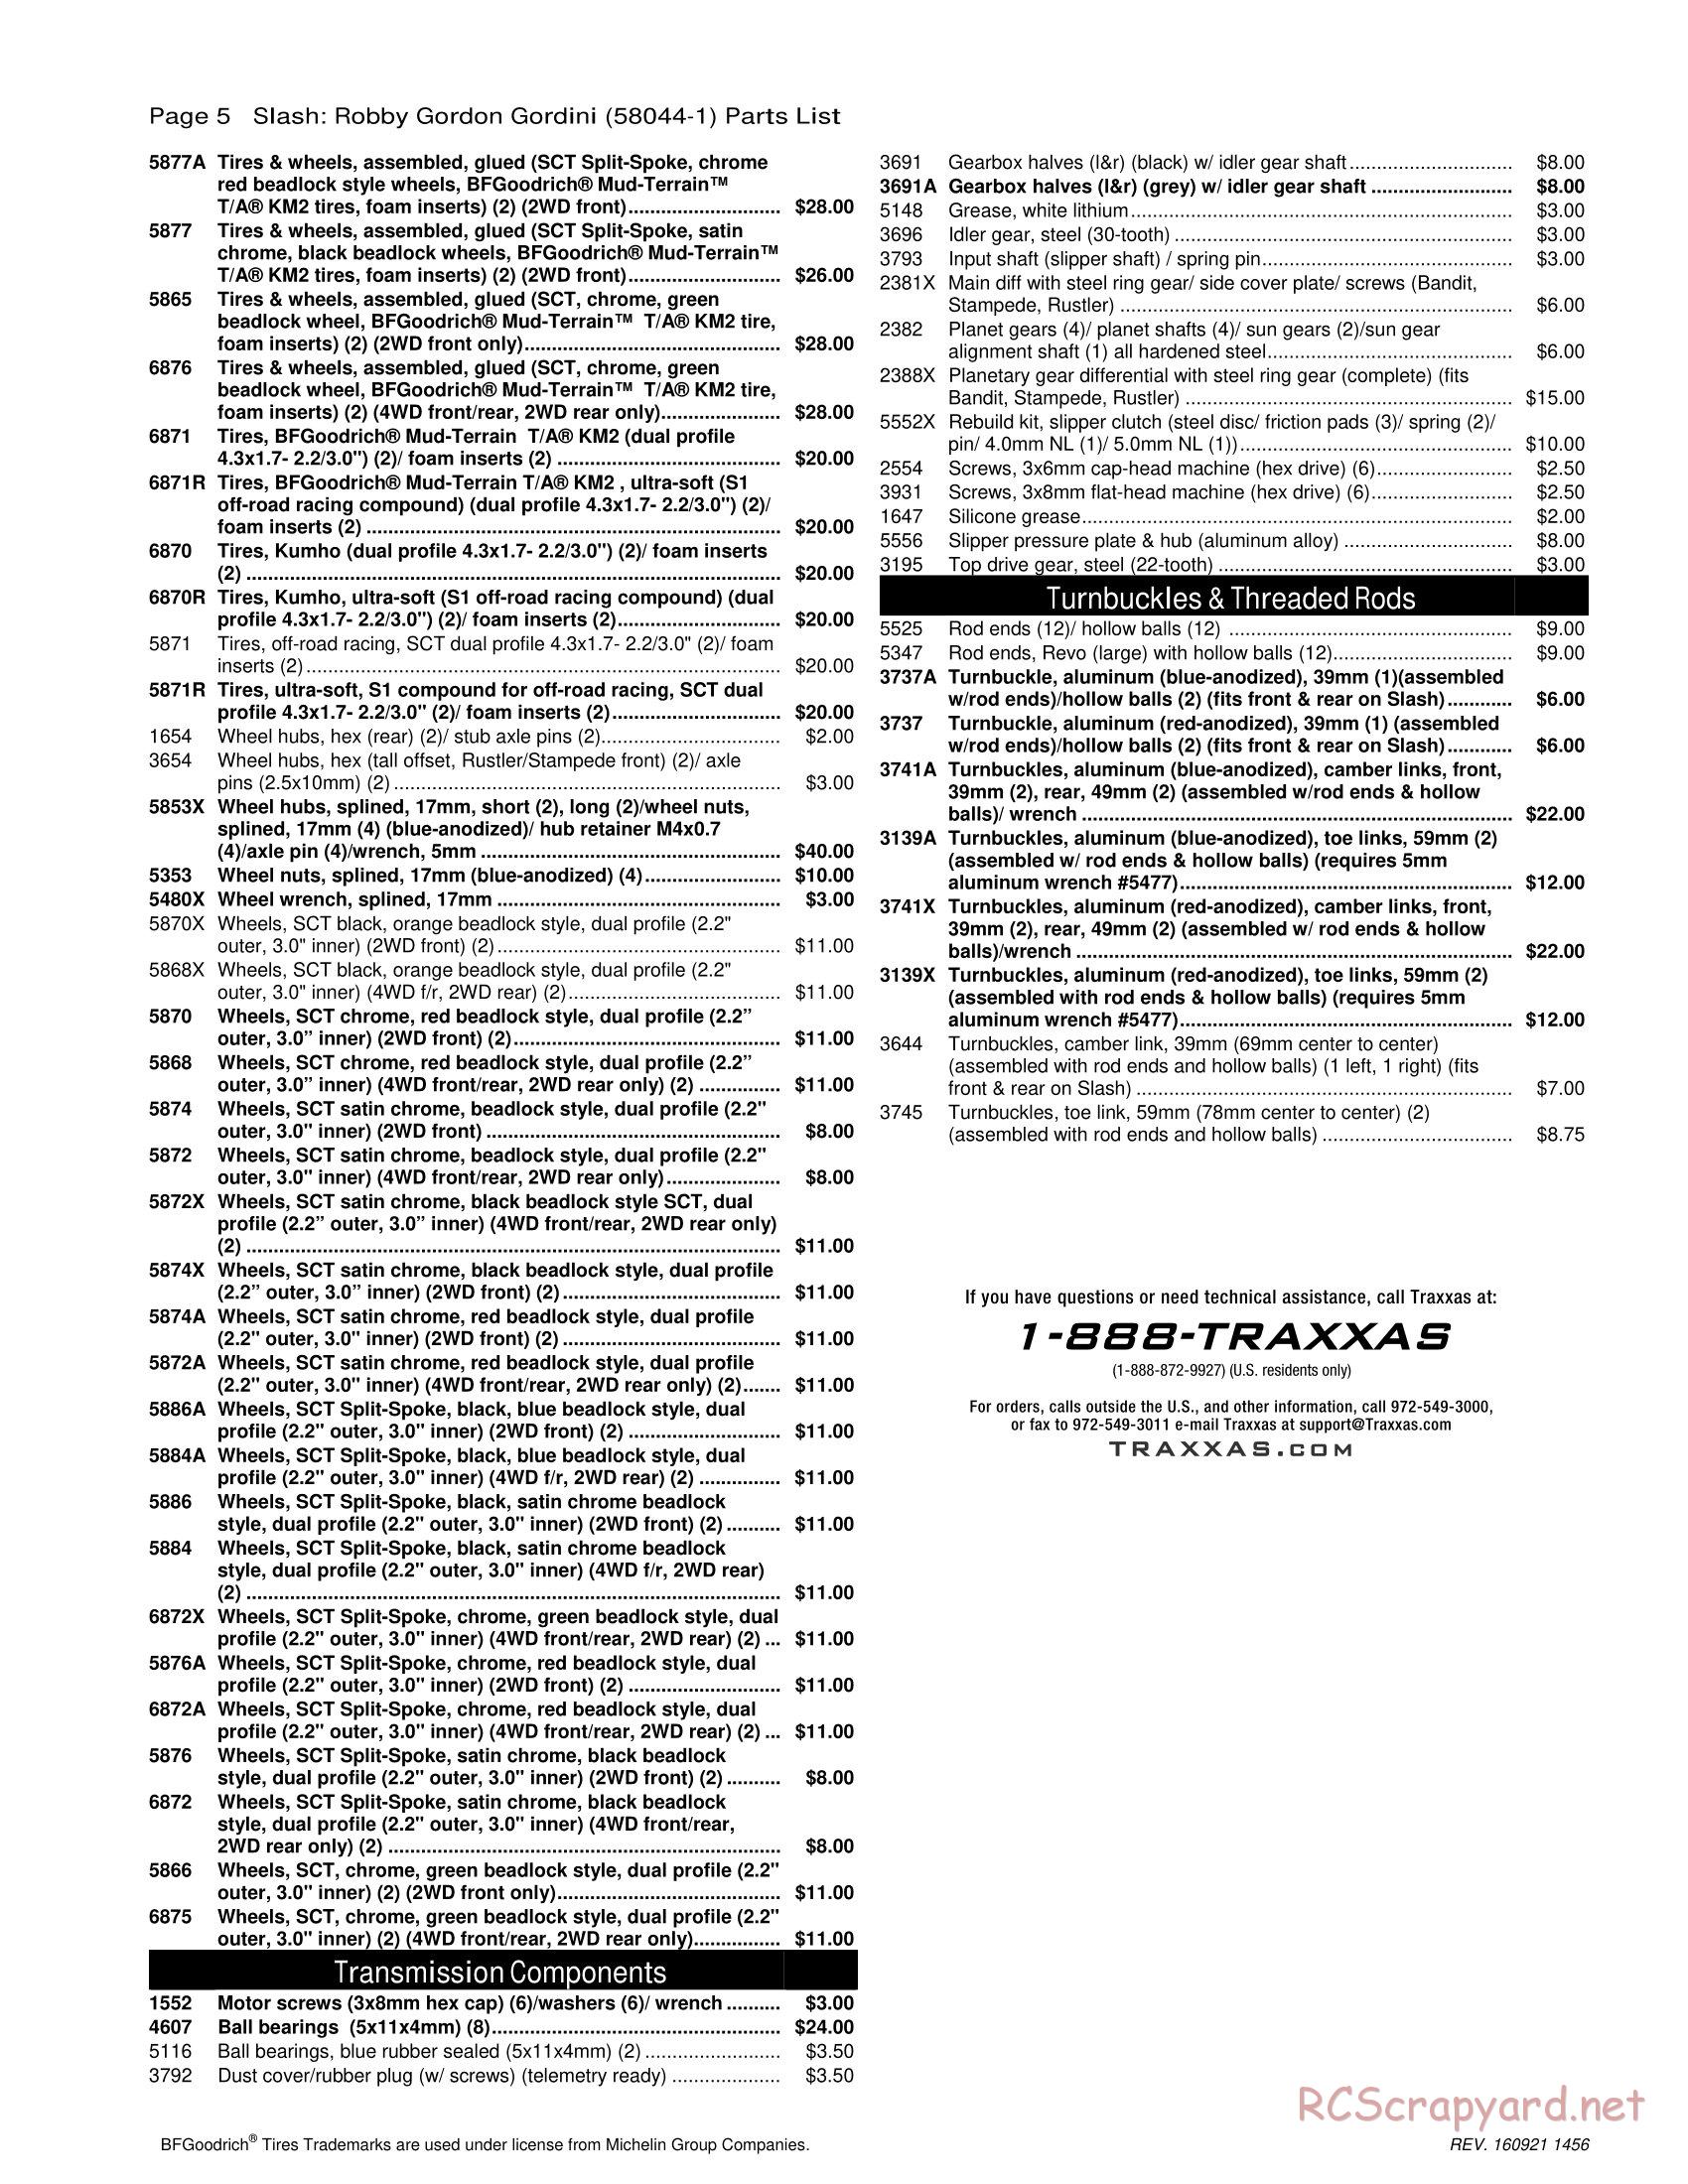 Traxxas - Slash 2WD Robby Gordon Dakar Ed (2014) - Parts List - Page 5